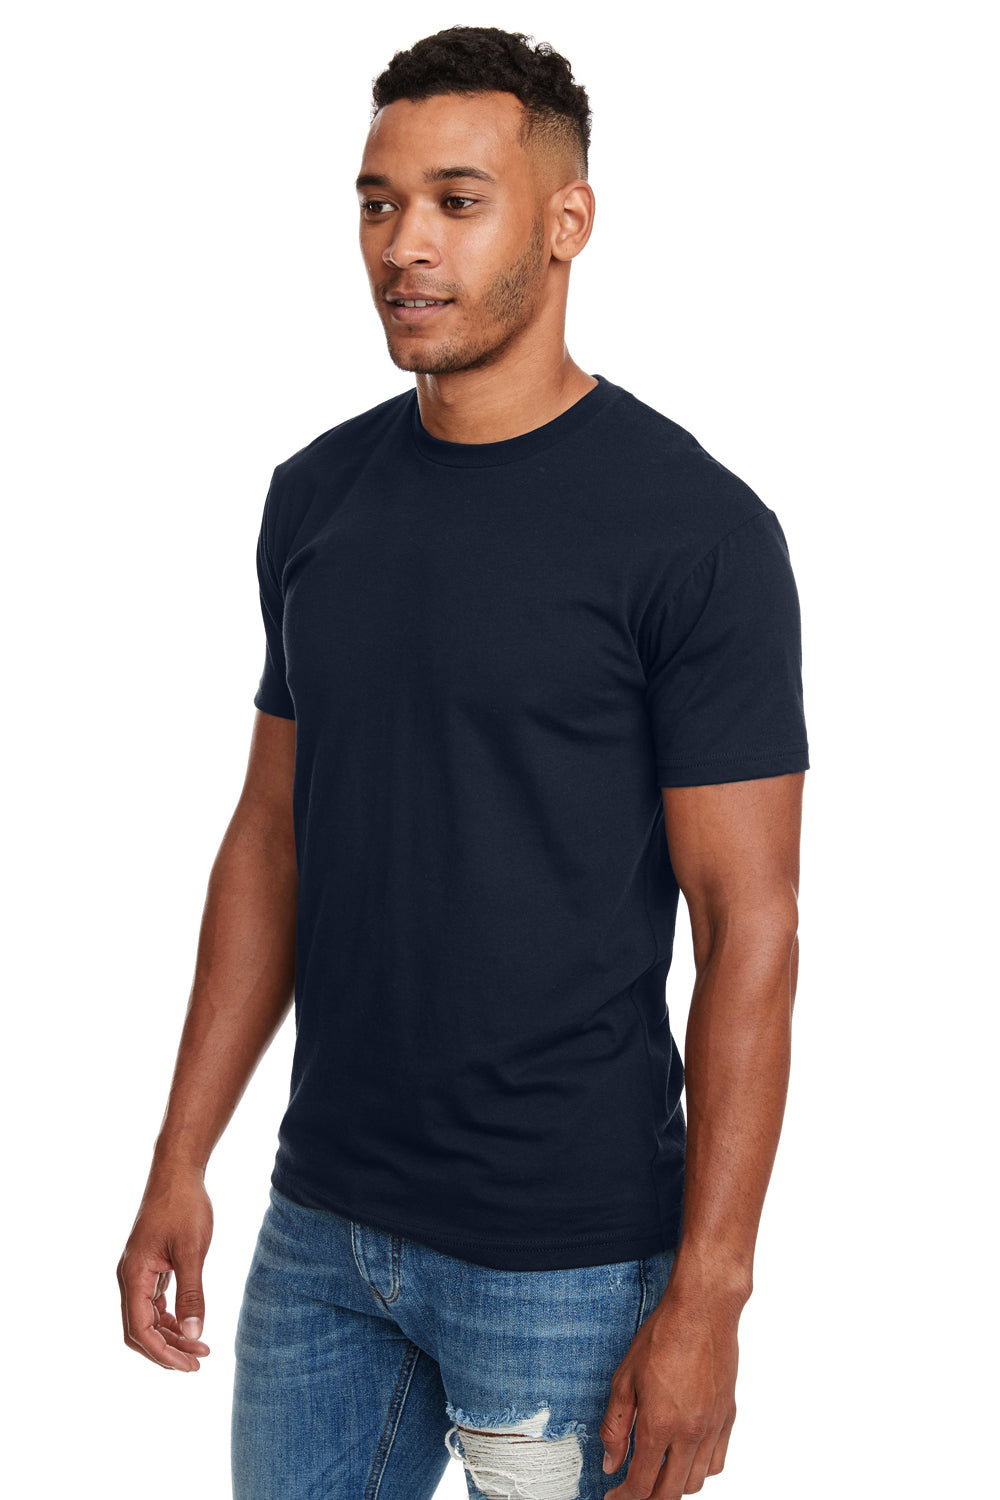 Next Level N6210 Mens CVC Jersey Short Sleeve Crewneck T-Shirt Navy Blue Side